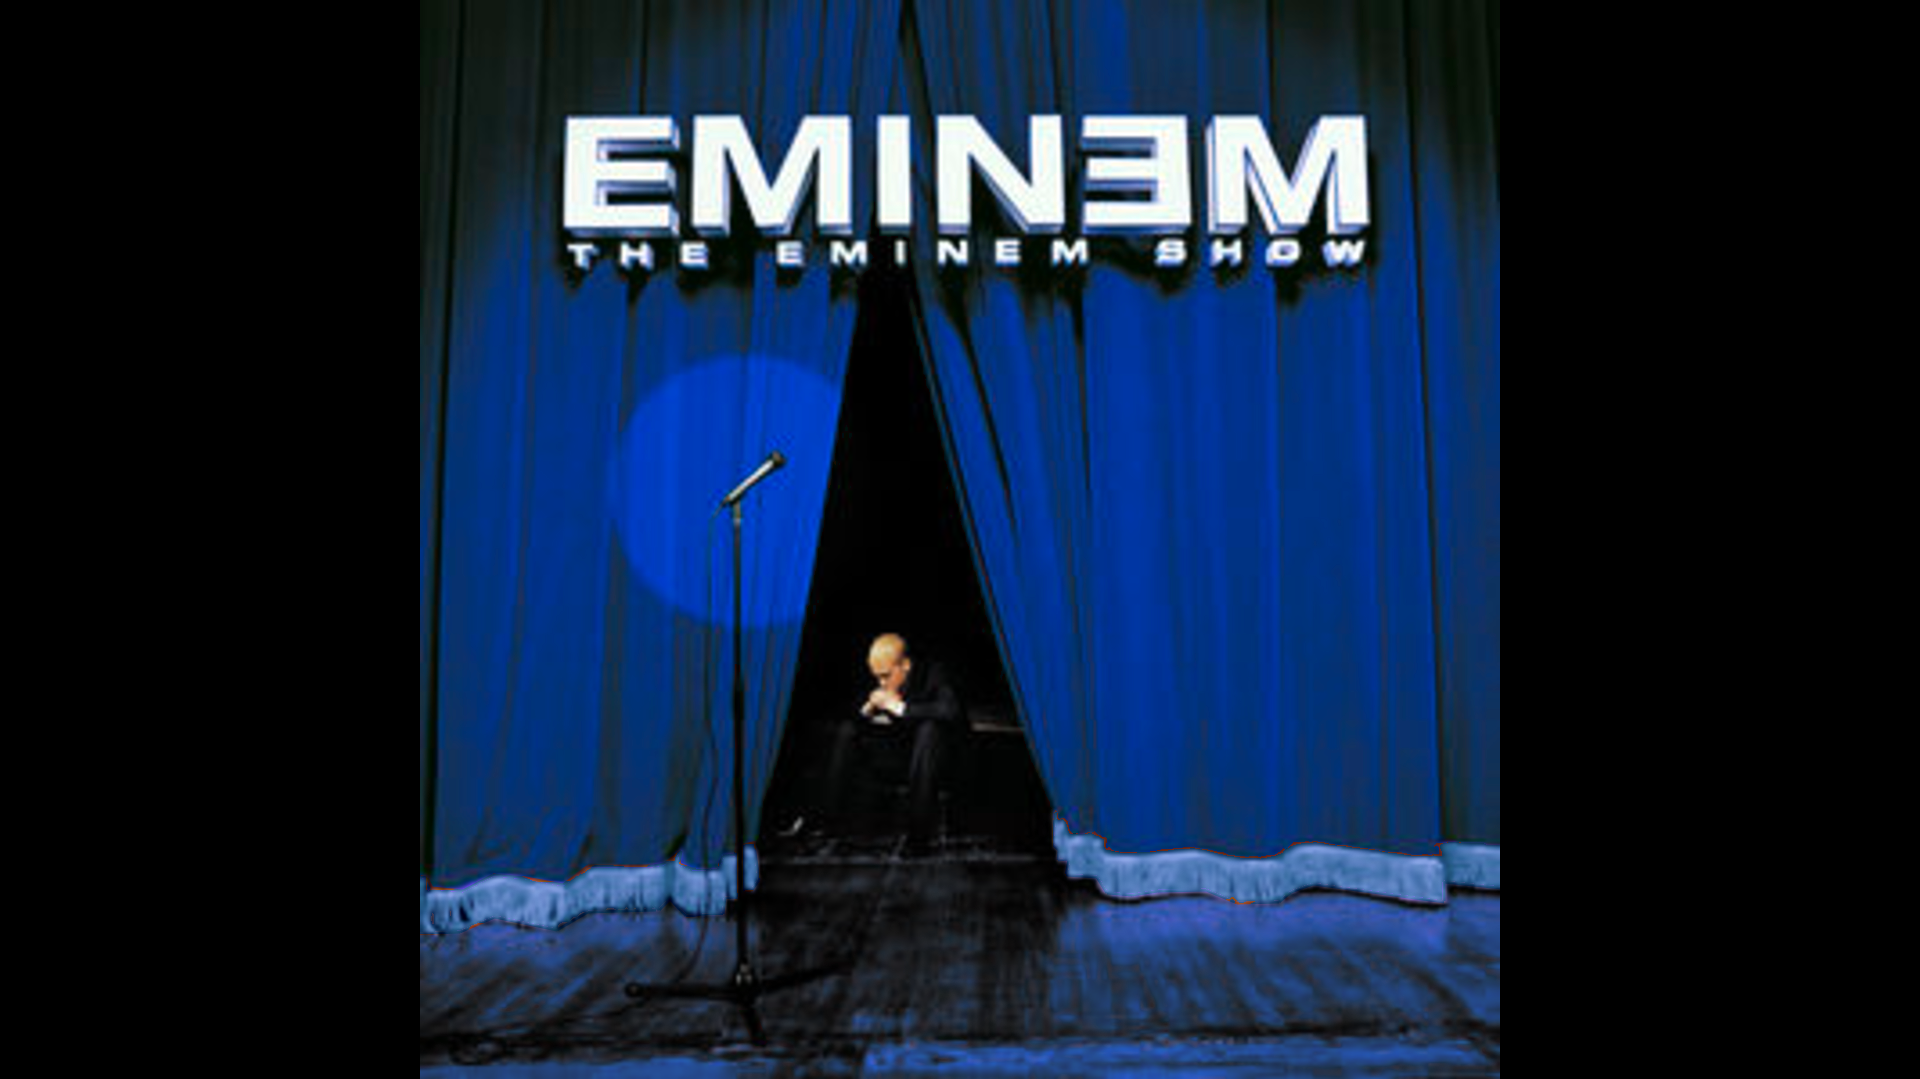 I Made The Eminem Show With Encore Color Scheme R